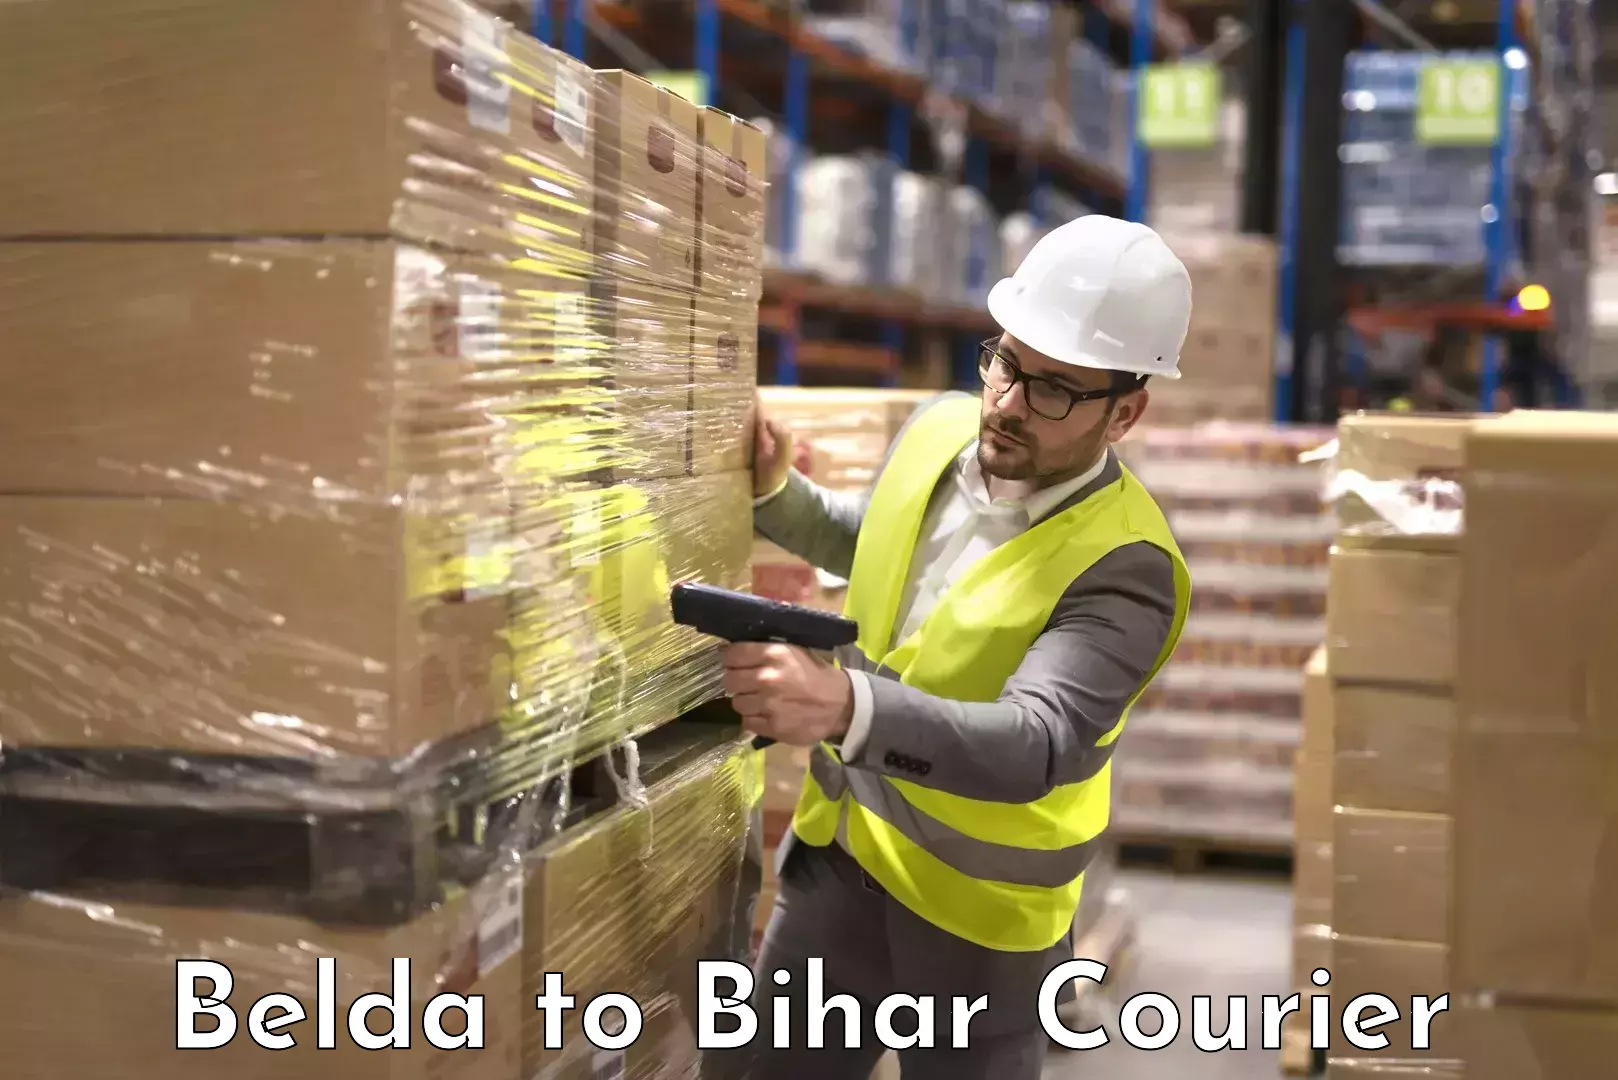 Luggage shipment specialists Belda to Bihar